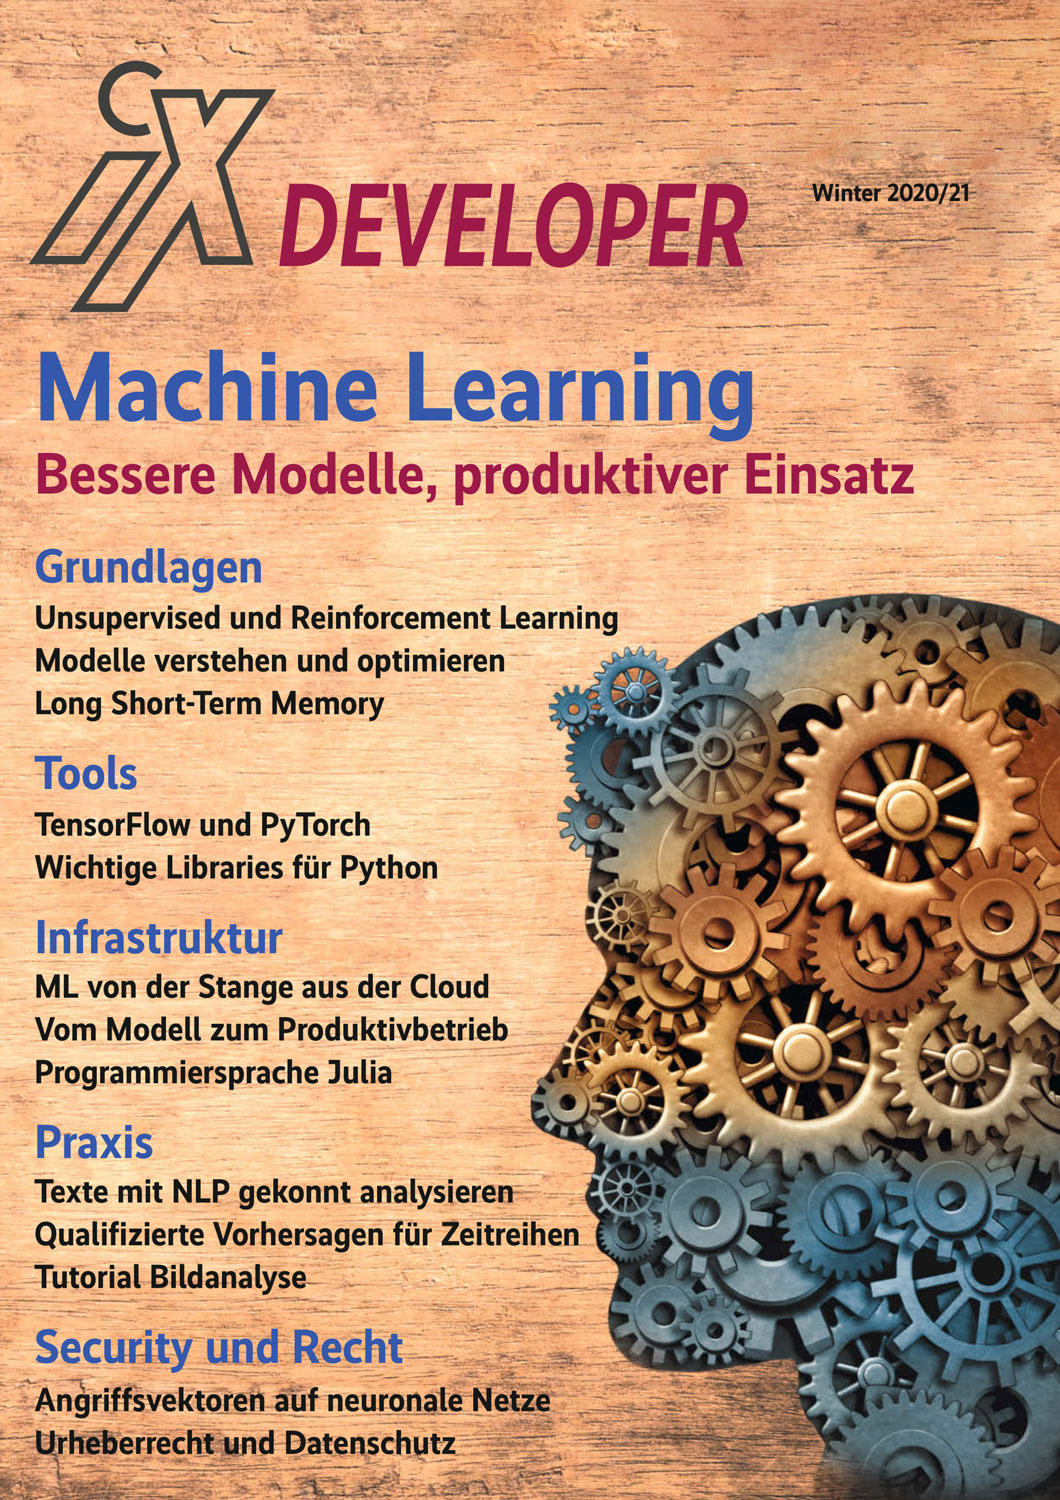 iX Developer Machine Learning 2020